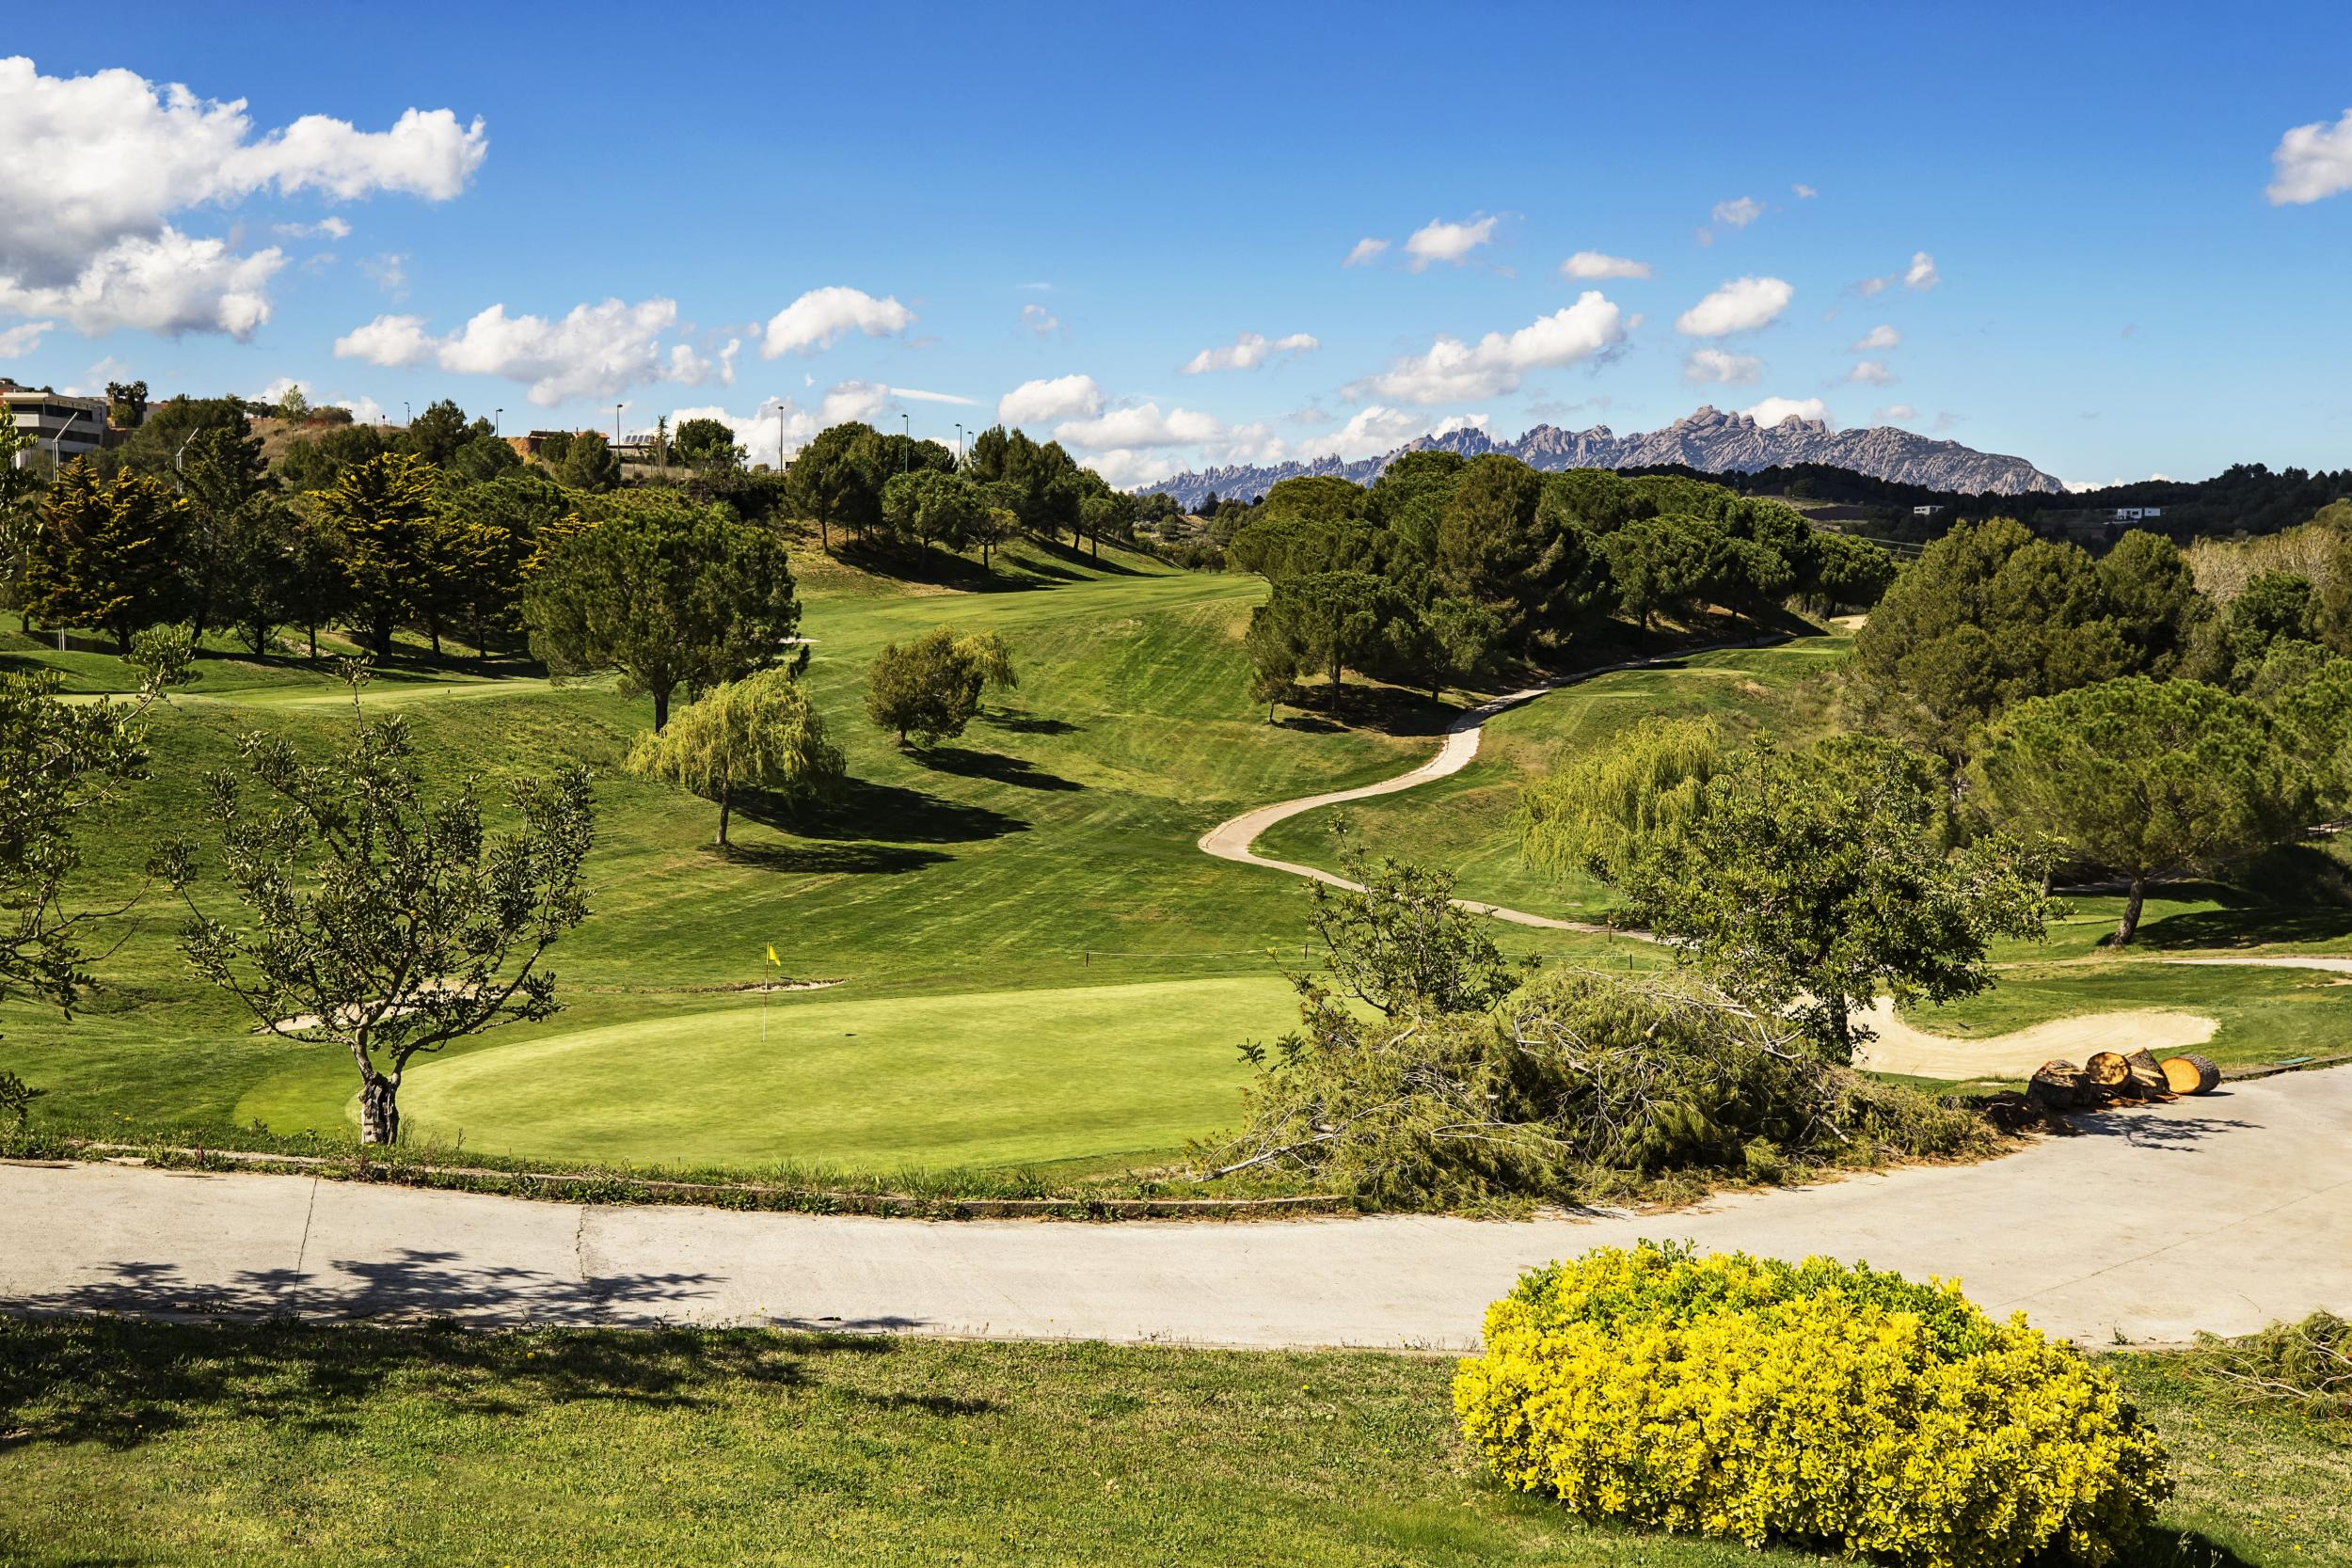 Derfra forbundet reagere Golf Club Barcelona | Consorci de Turisme del Baix Llobregat